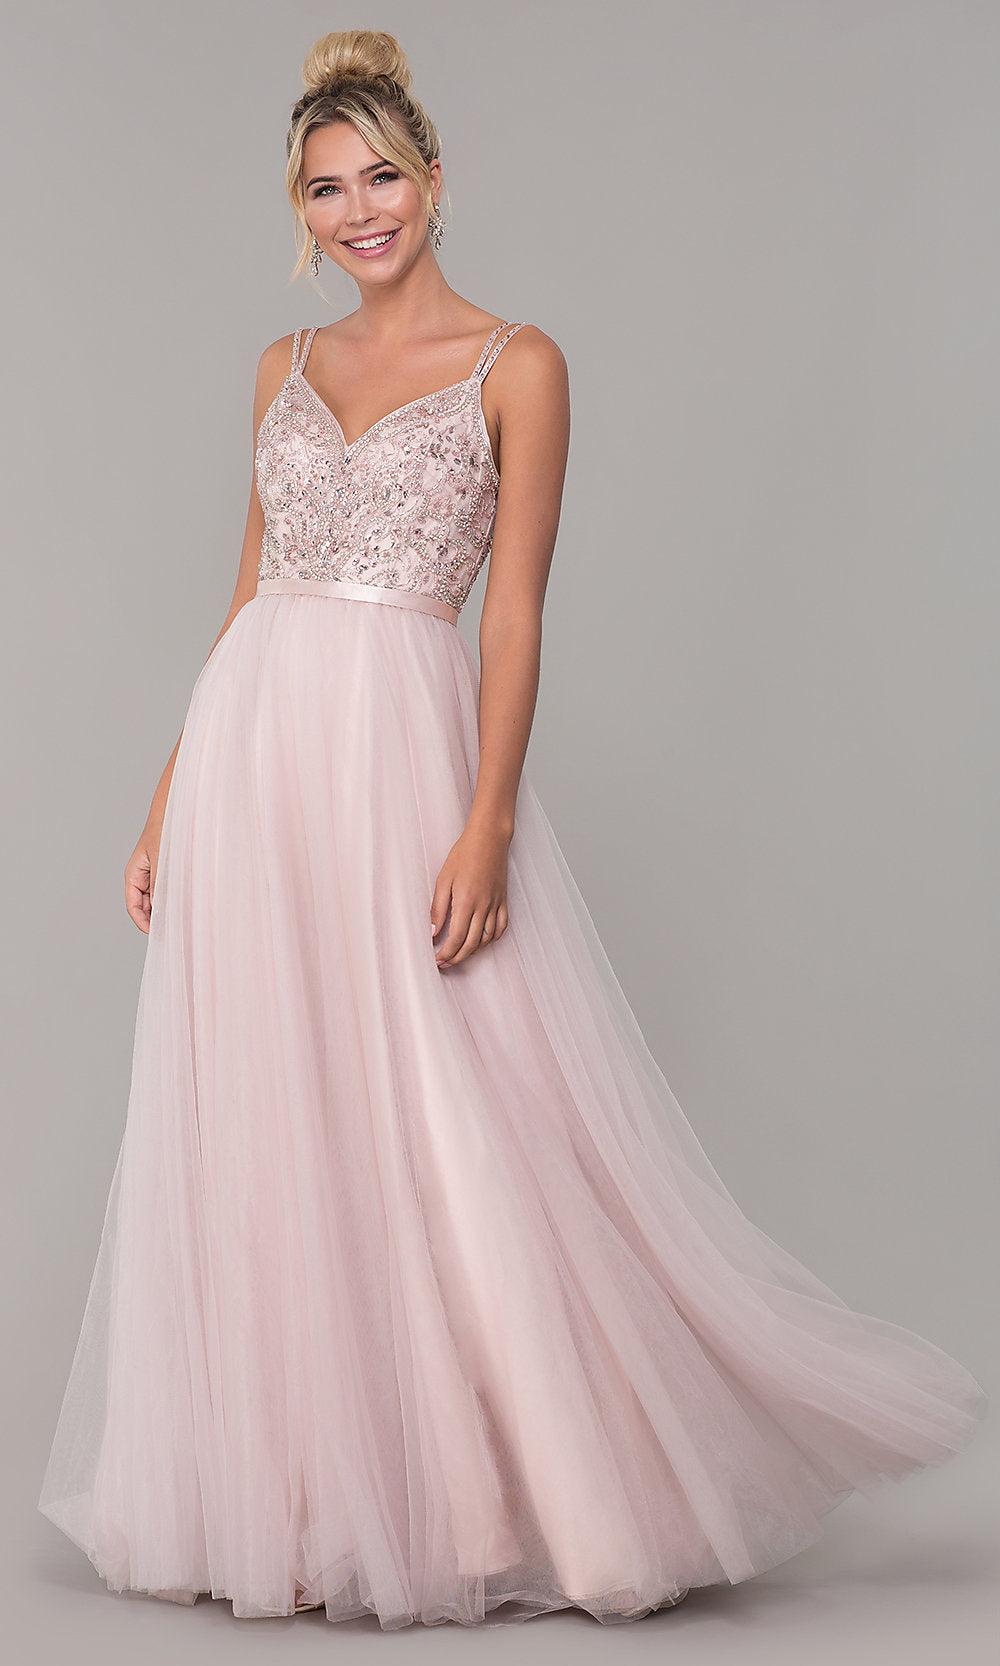 Dusty Pink Long Prom Dress with Rhinestone-Beaded Bodice